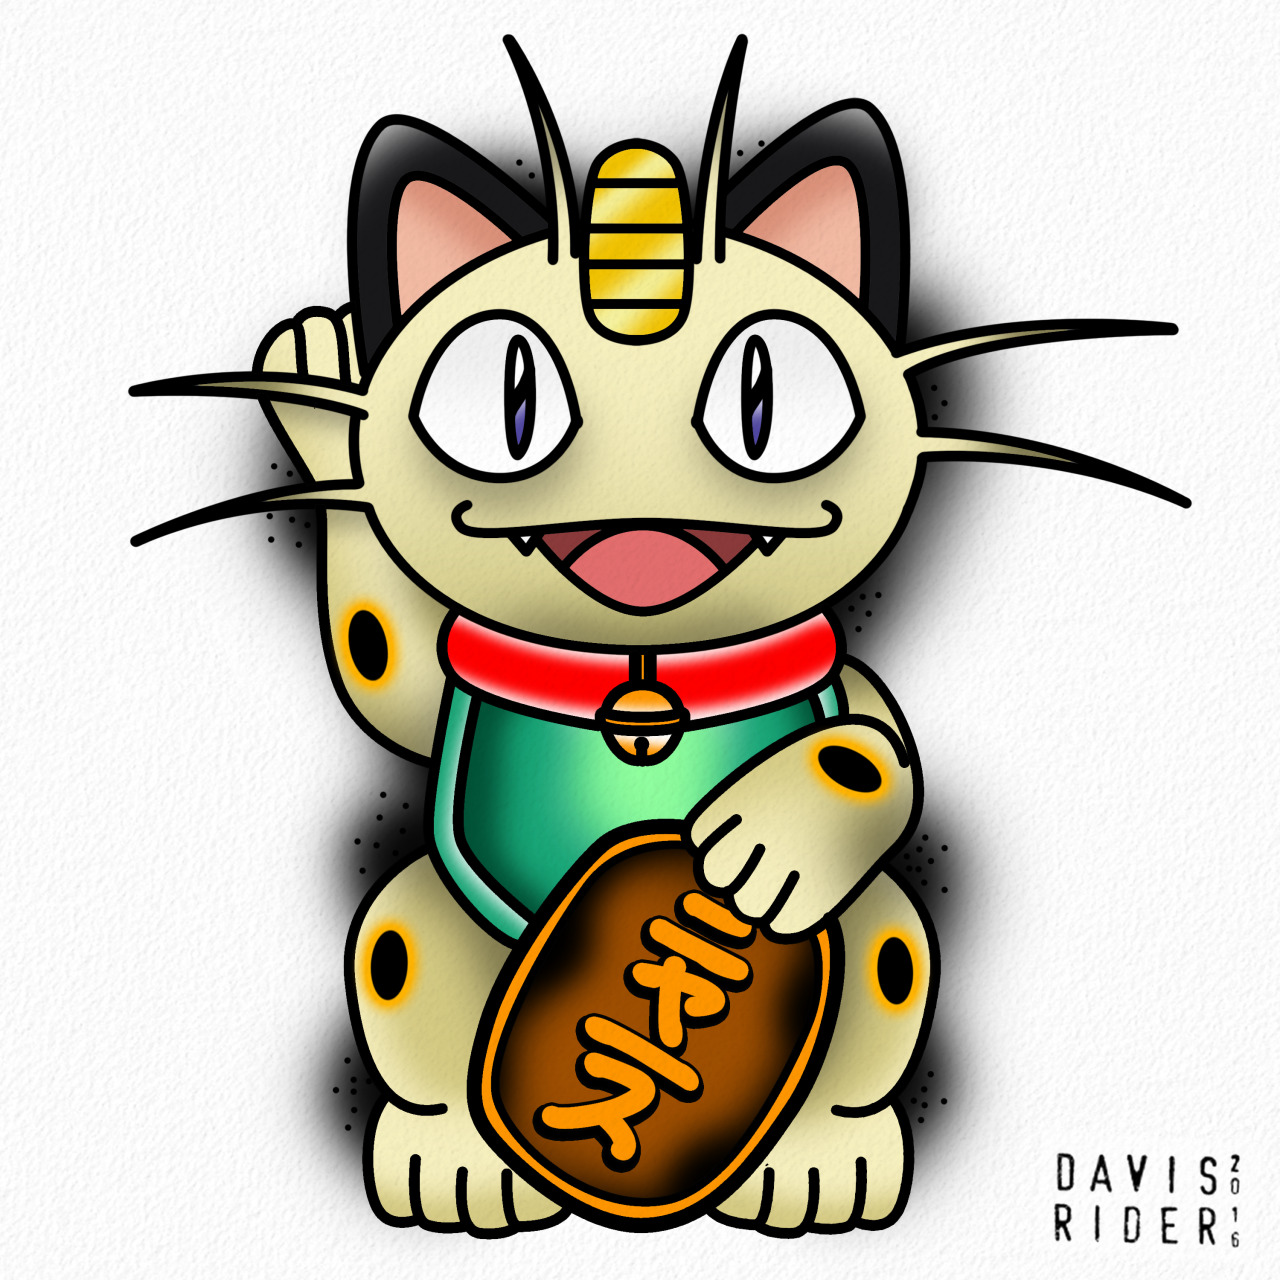 The Art of Davis Rider. — Meowth as a Japanese Lucky Cat!